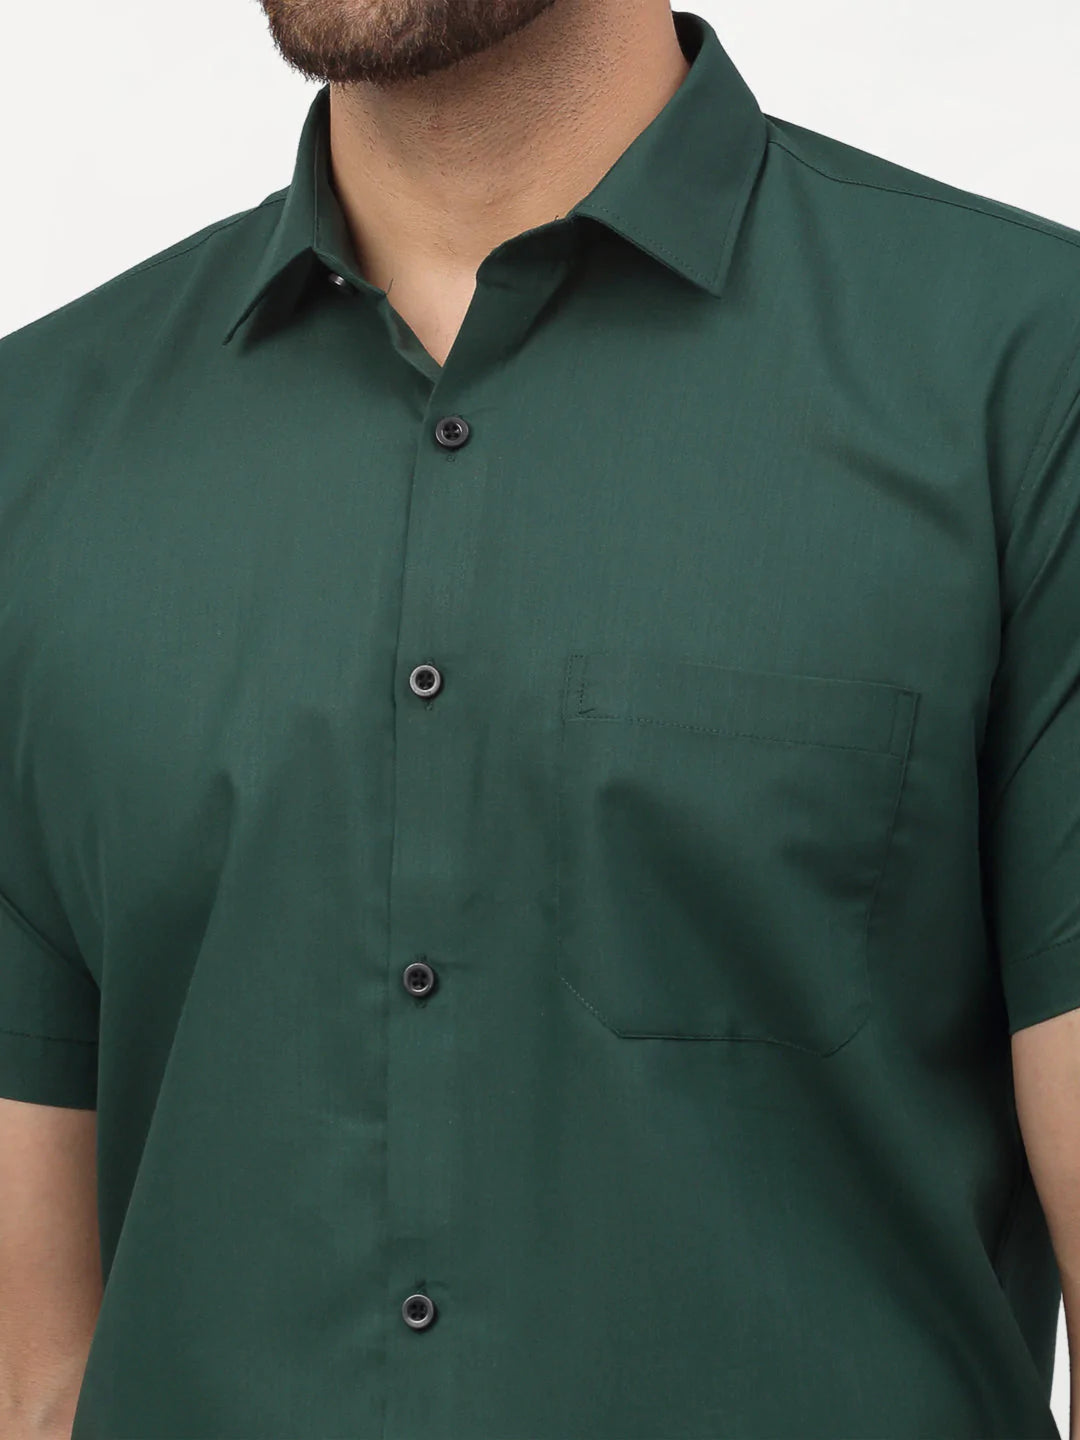 Jainish Olive Men's Cotton Half Sleeves Solid Formal Shirts ( SF 754Olive )